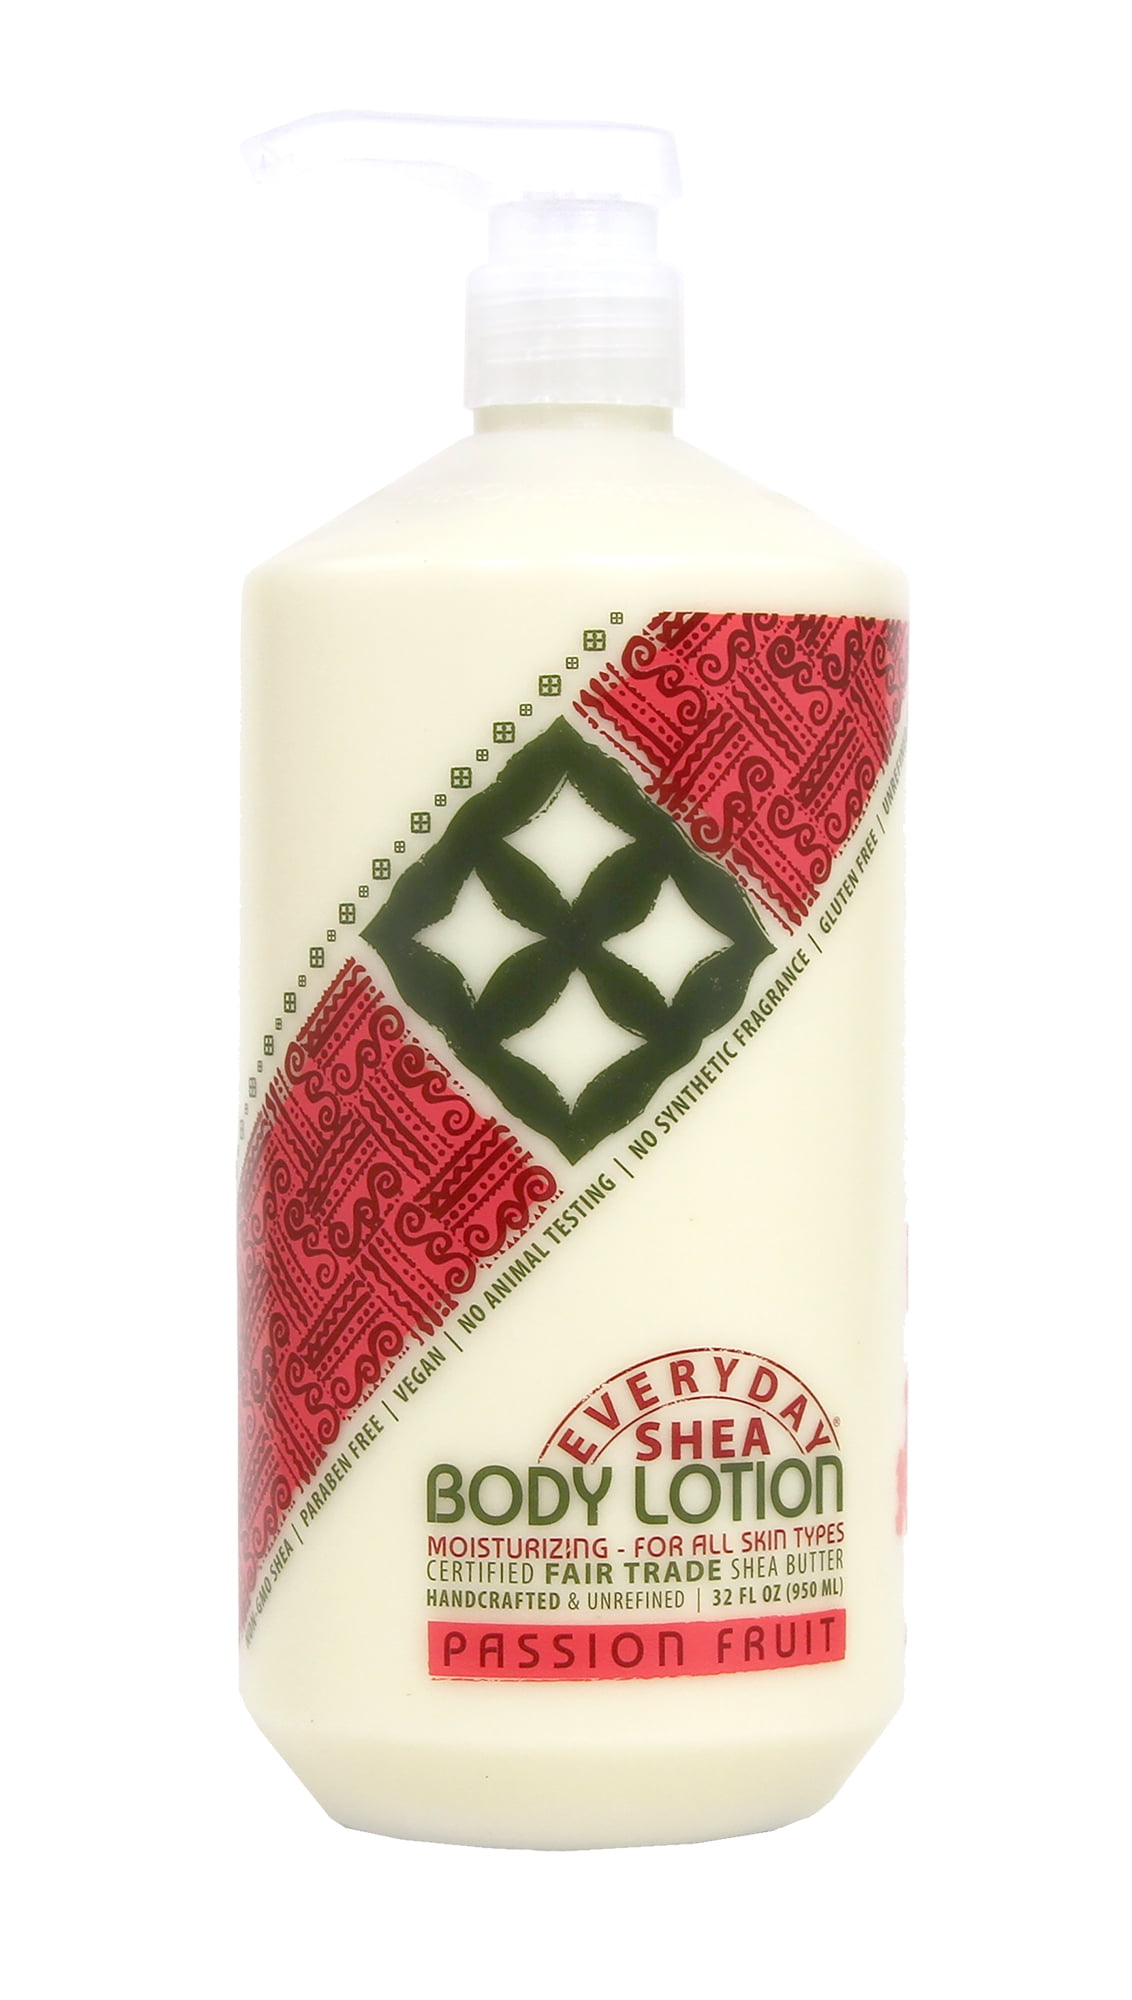 Laundry Fresh Body Lotion Shea Butter and Aloe Lotion Body 